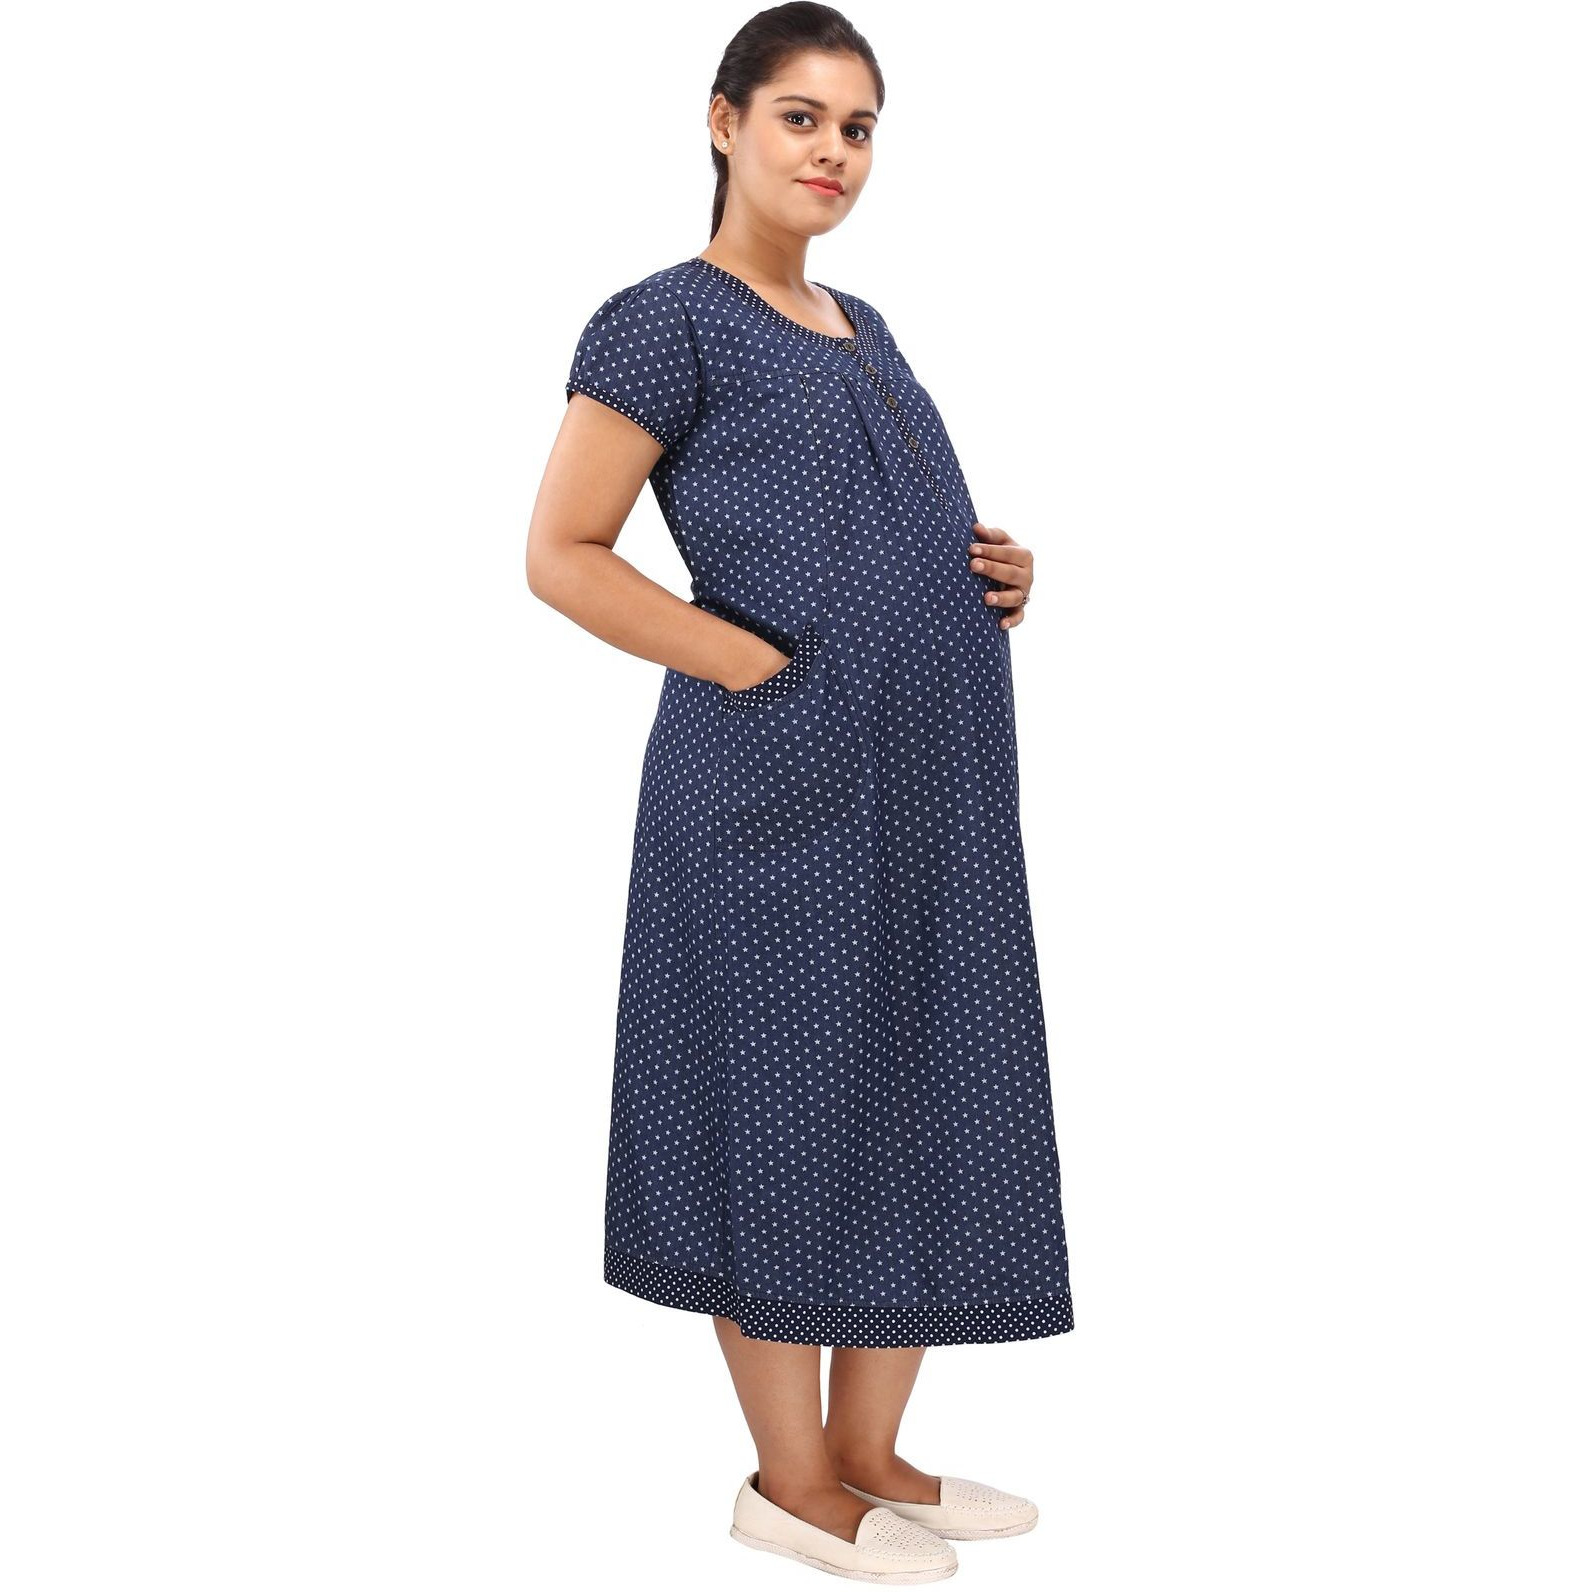 Mamma's Maternity Women's Star Printed Blue Denim Maternity Dress (Size:M)